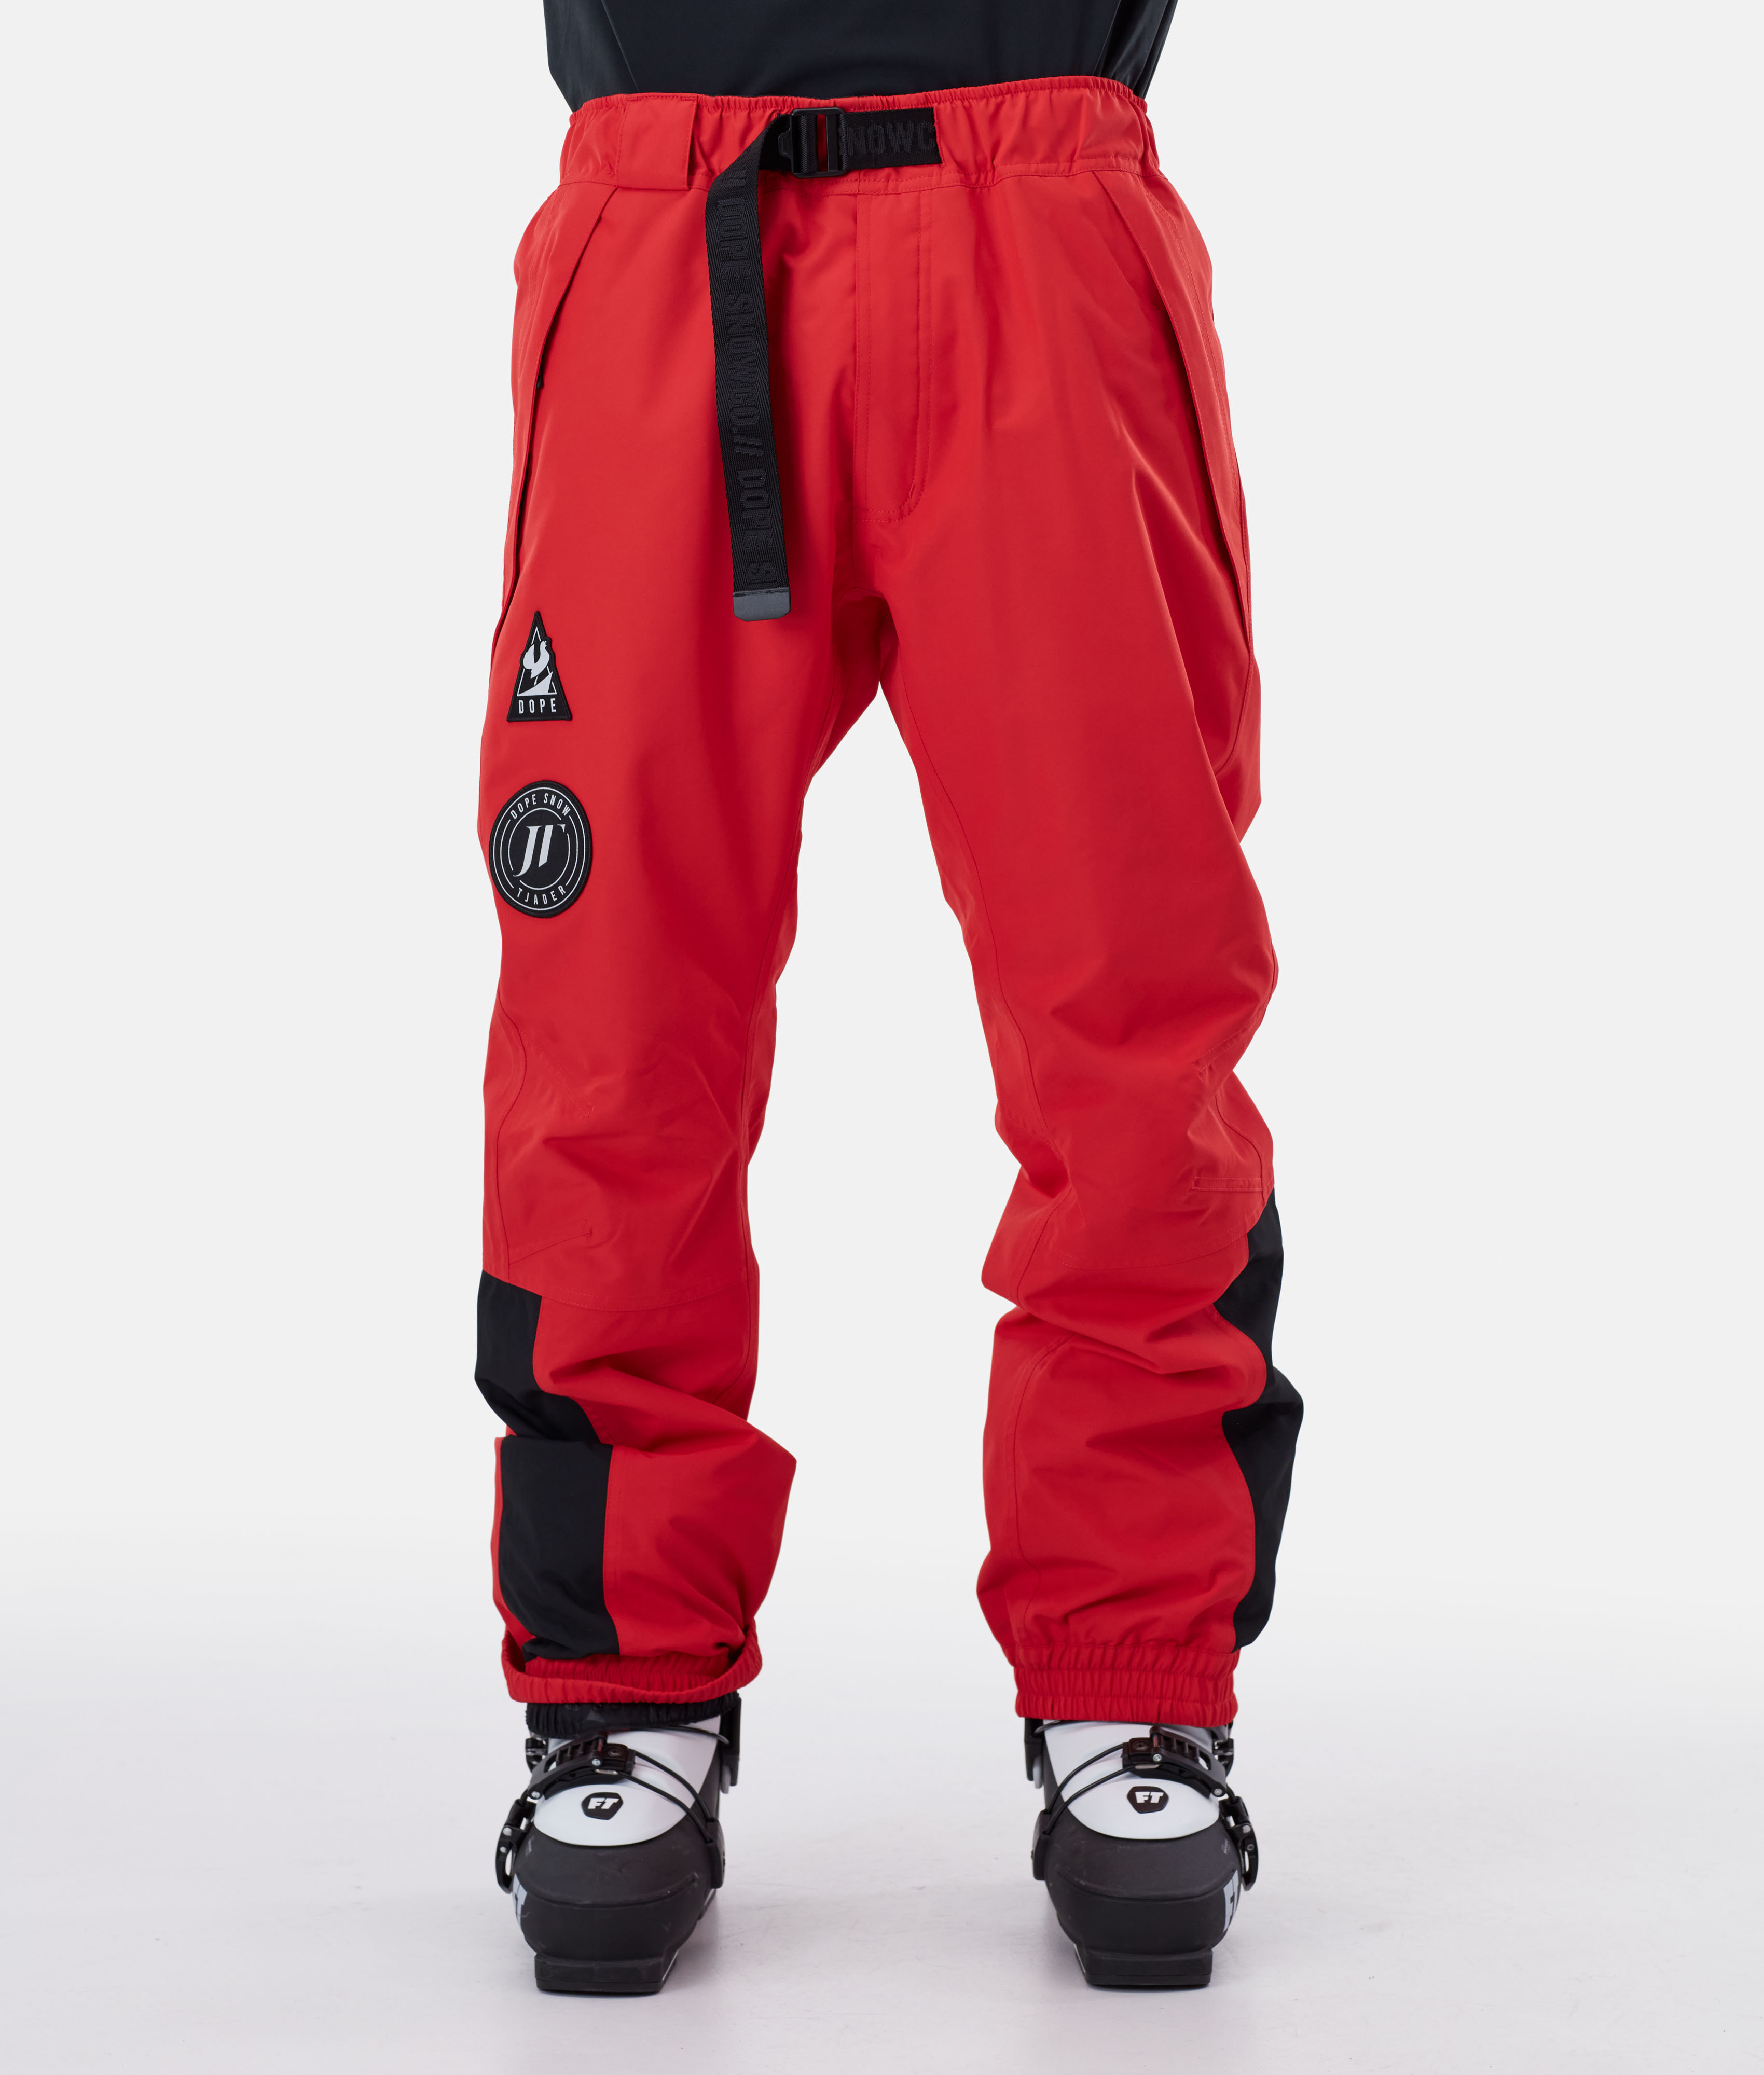 Ski Pants Deep Red Waterproof 2000mm Windproof Breathable Trespass Stormrider 